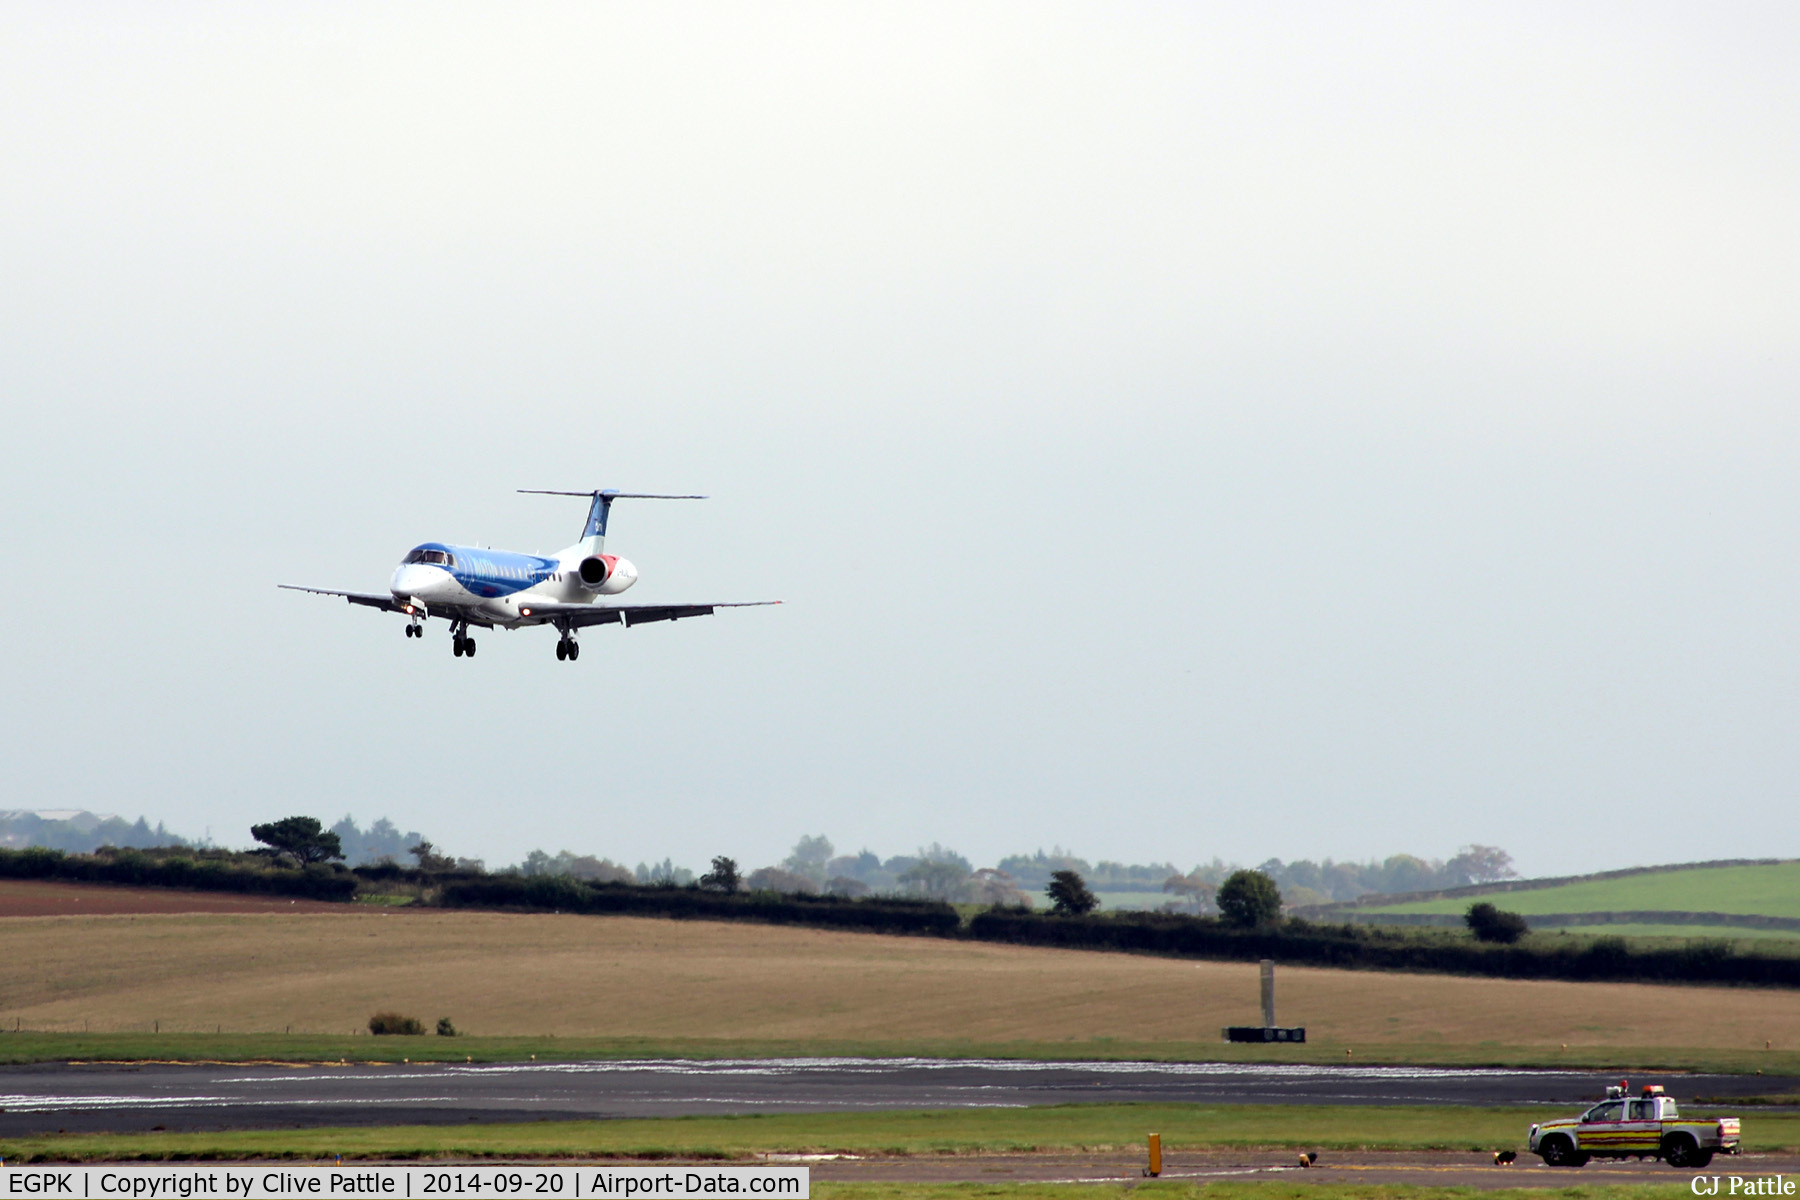 Glasgow Prestwick International Airport, Glasgow, Scotland United Kingdom (EGPK) - Airfield operations - landing Runway 31